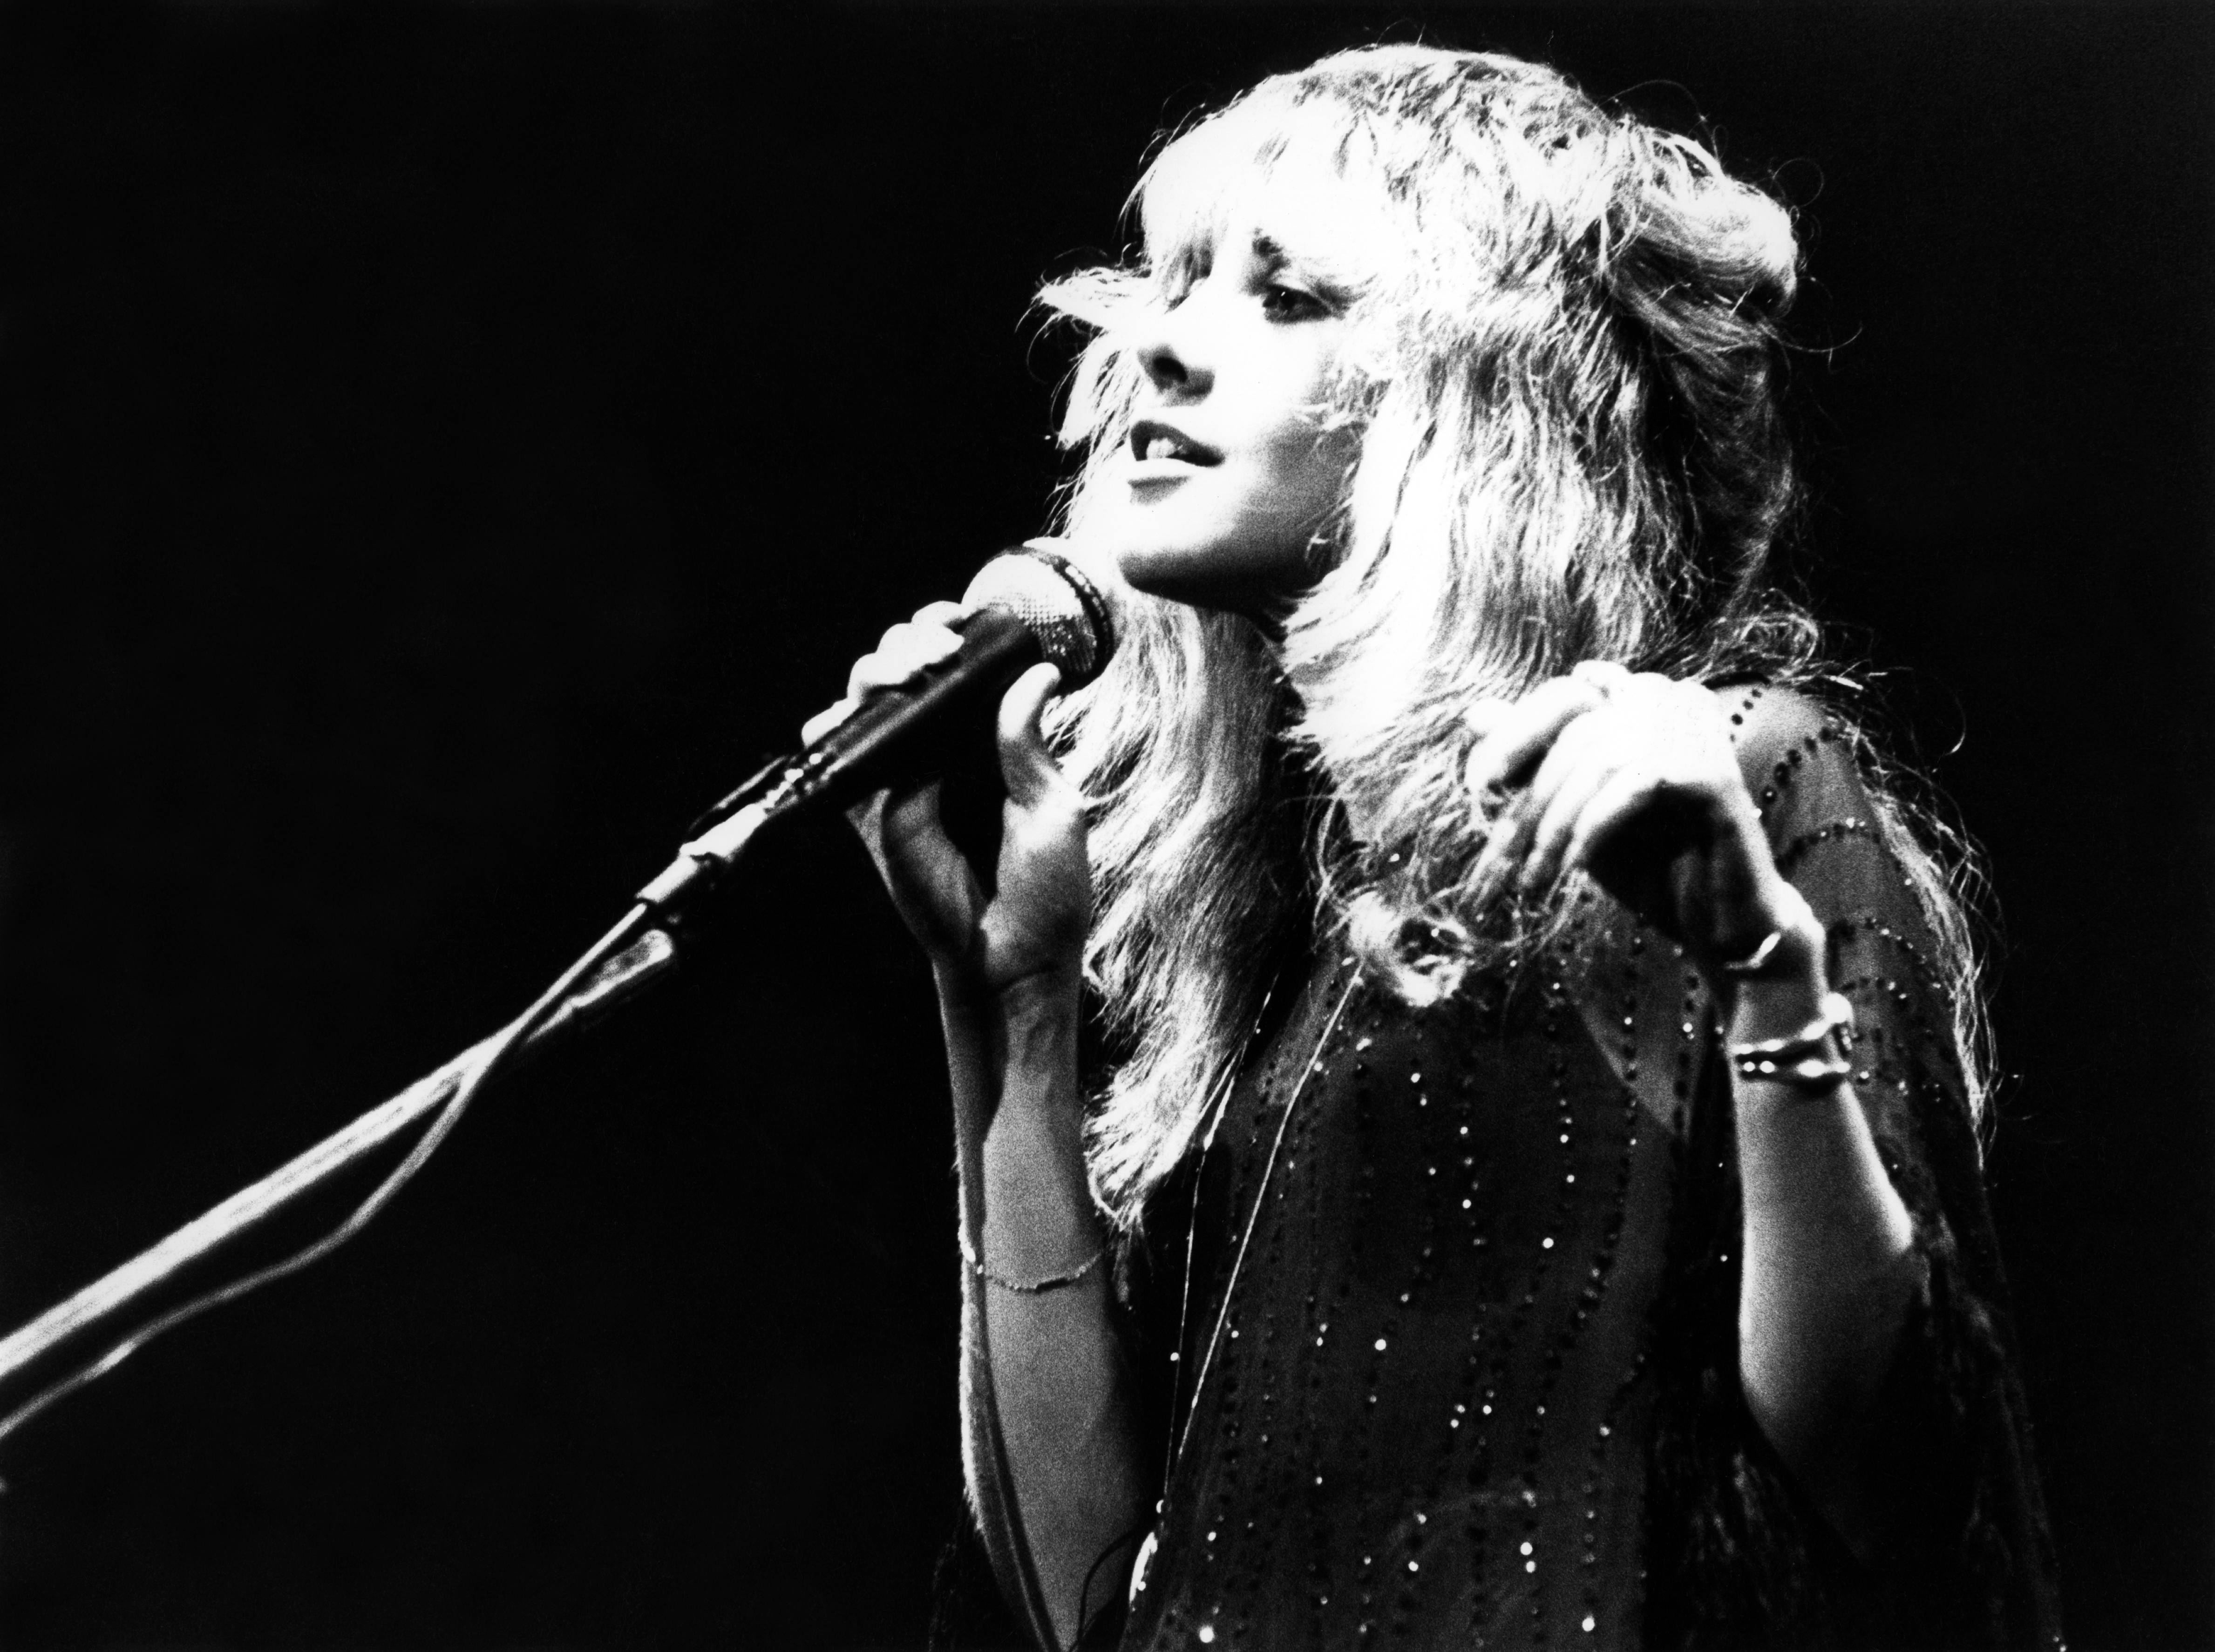 Photo of Stevie Nicks and Fleetwood Mac; Stevie Nicks performing live